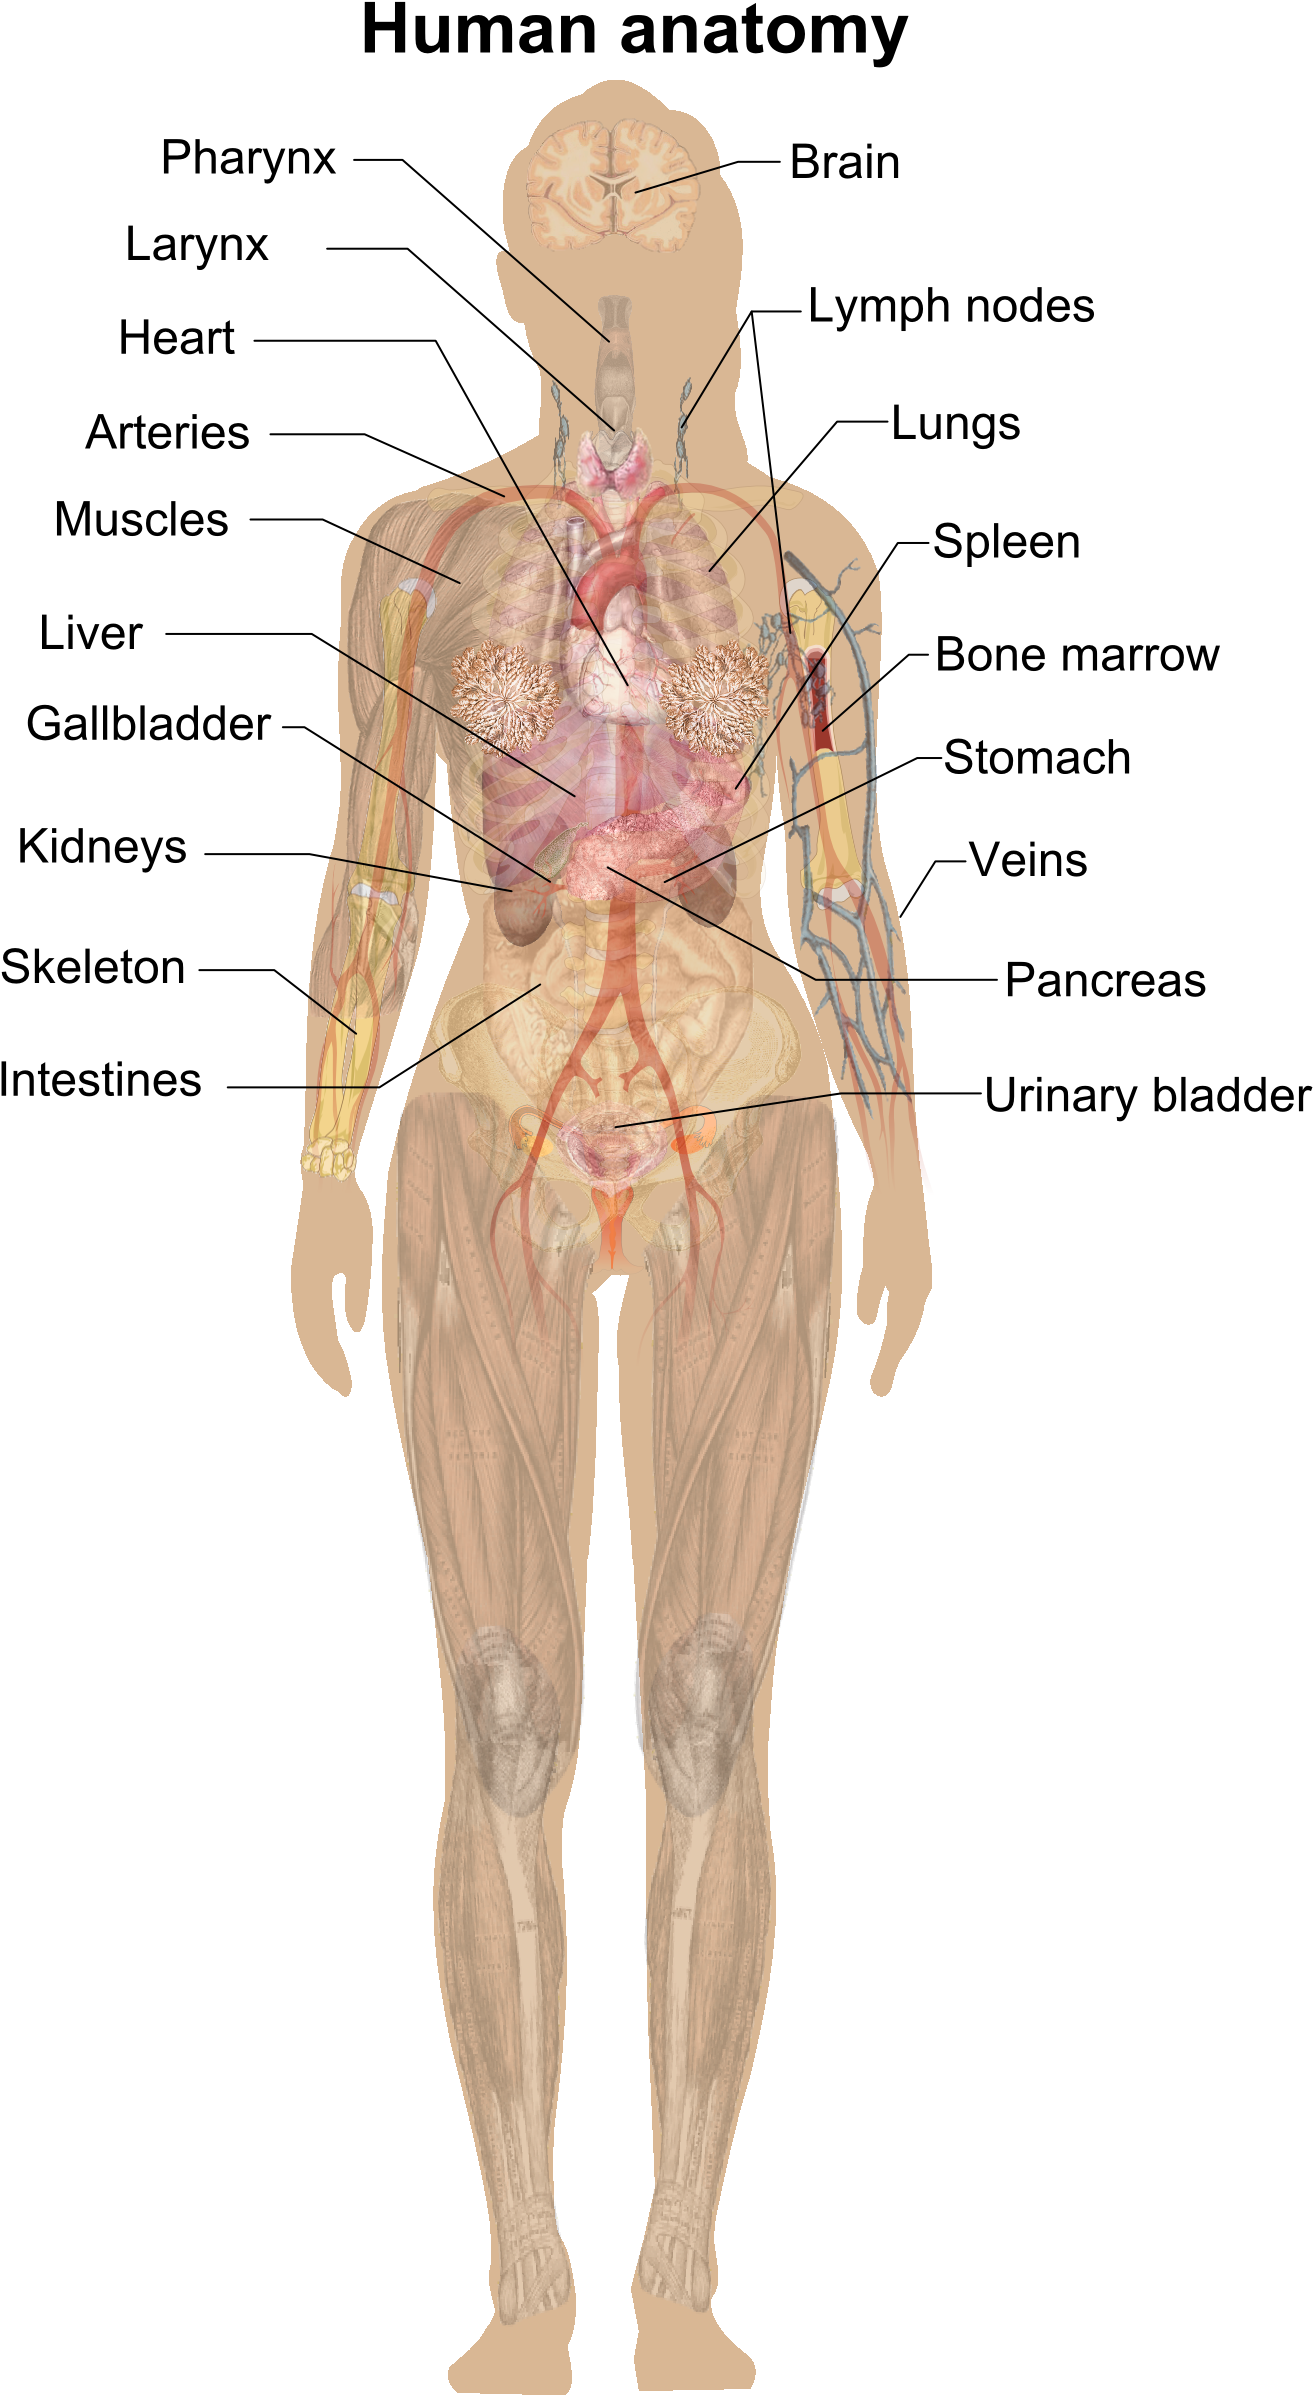 A Diagram Of A Woman's Body